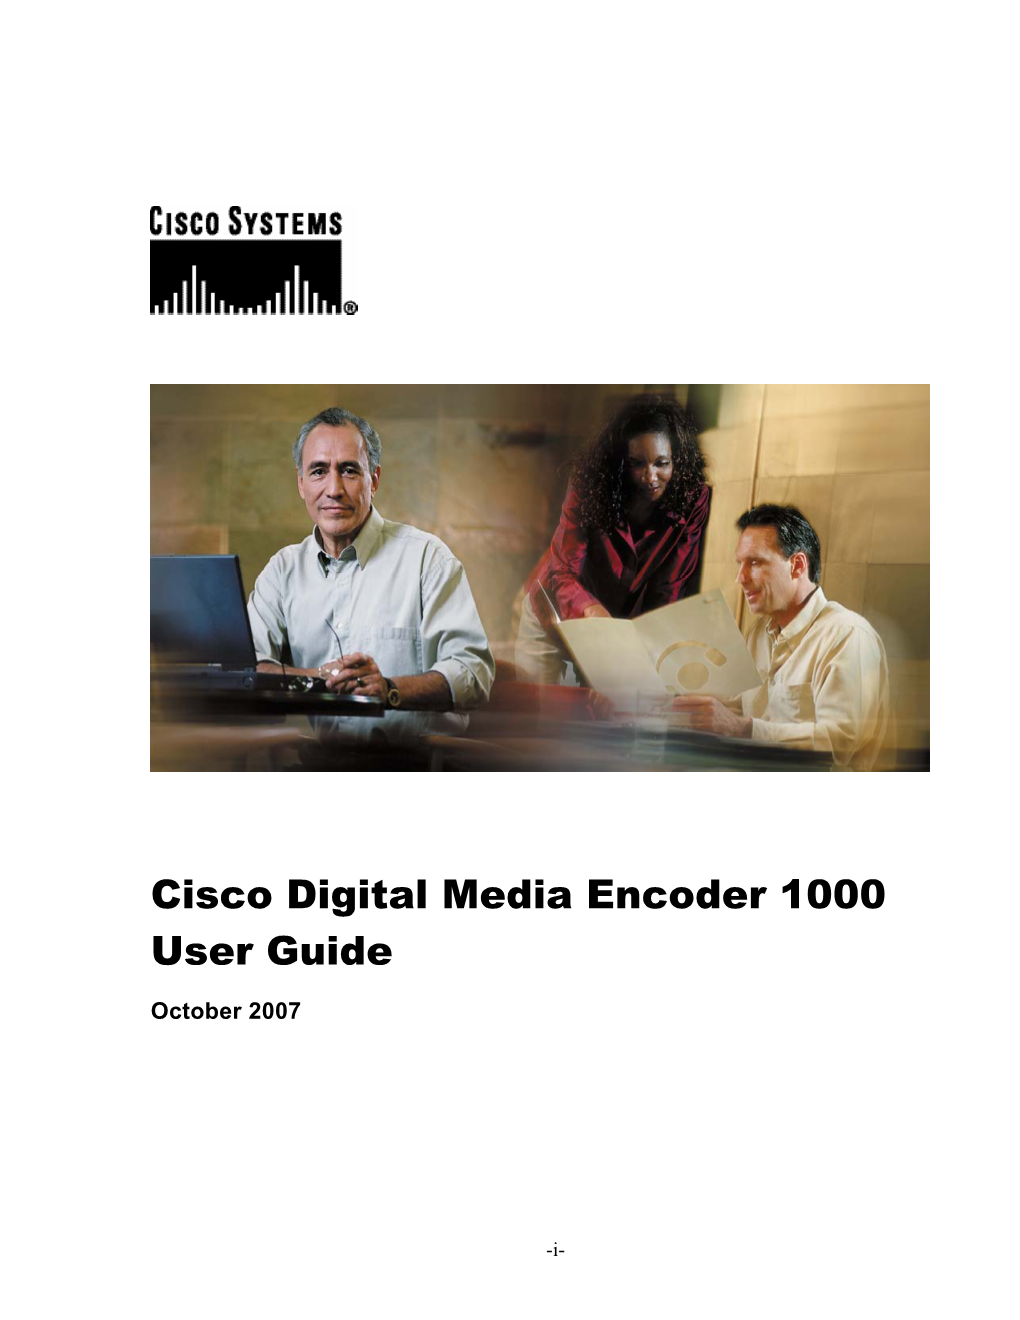 Cisco Digital Media Encoder 1000 User Guide